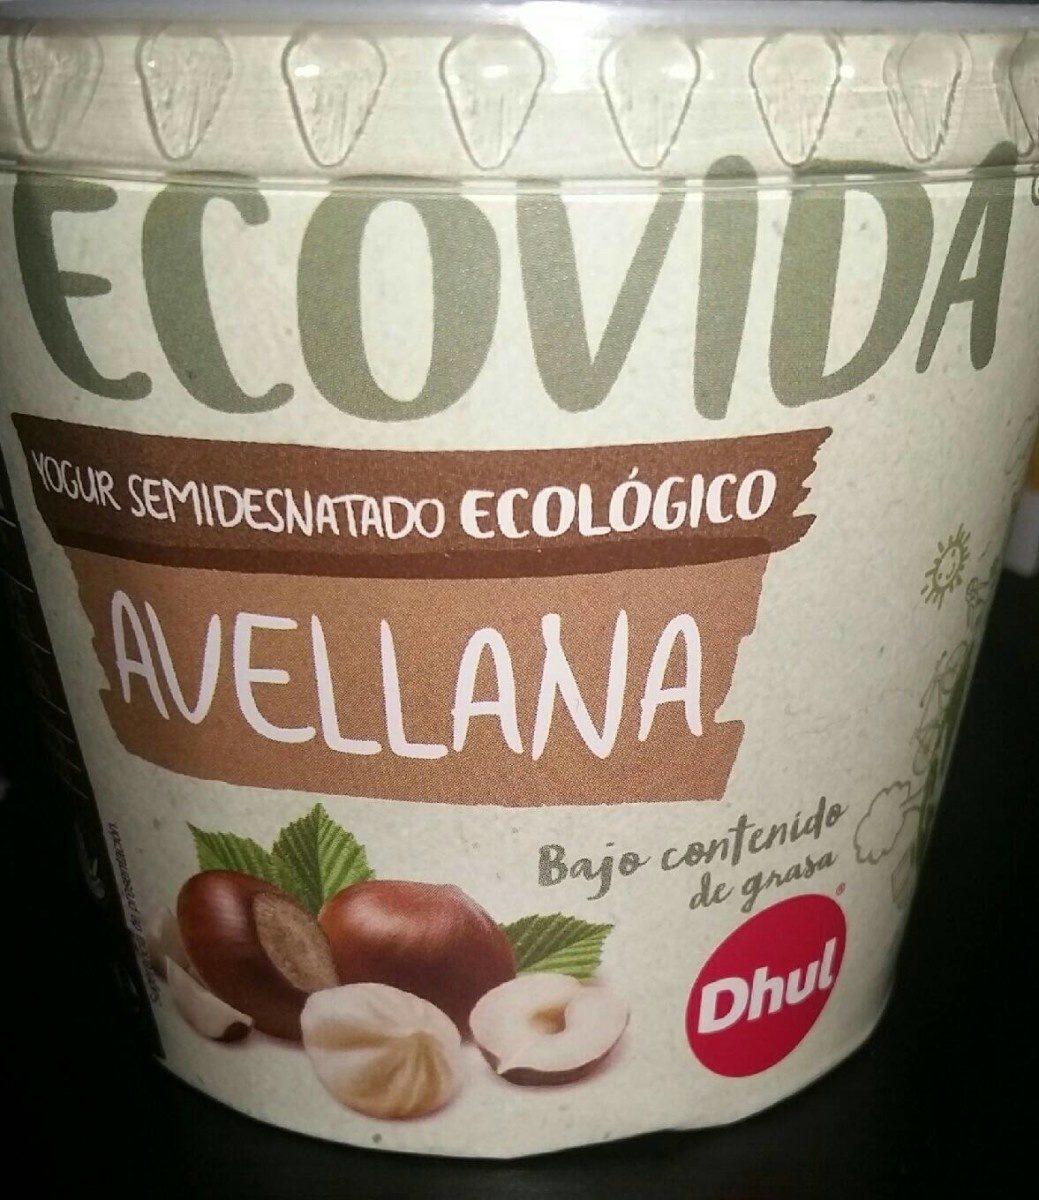 Ecovida yogur semidesnatado ecologico avellana - Product - es